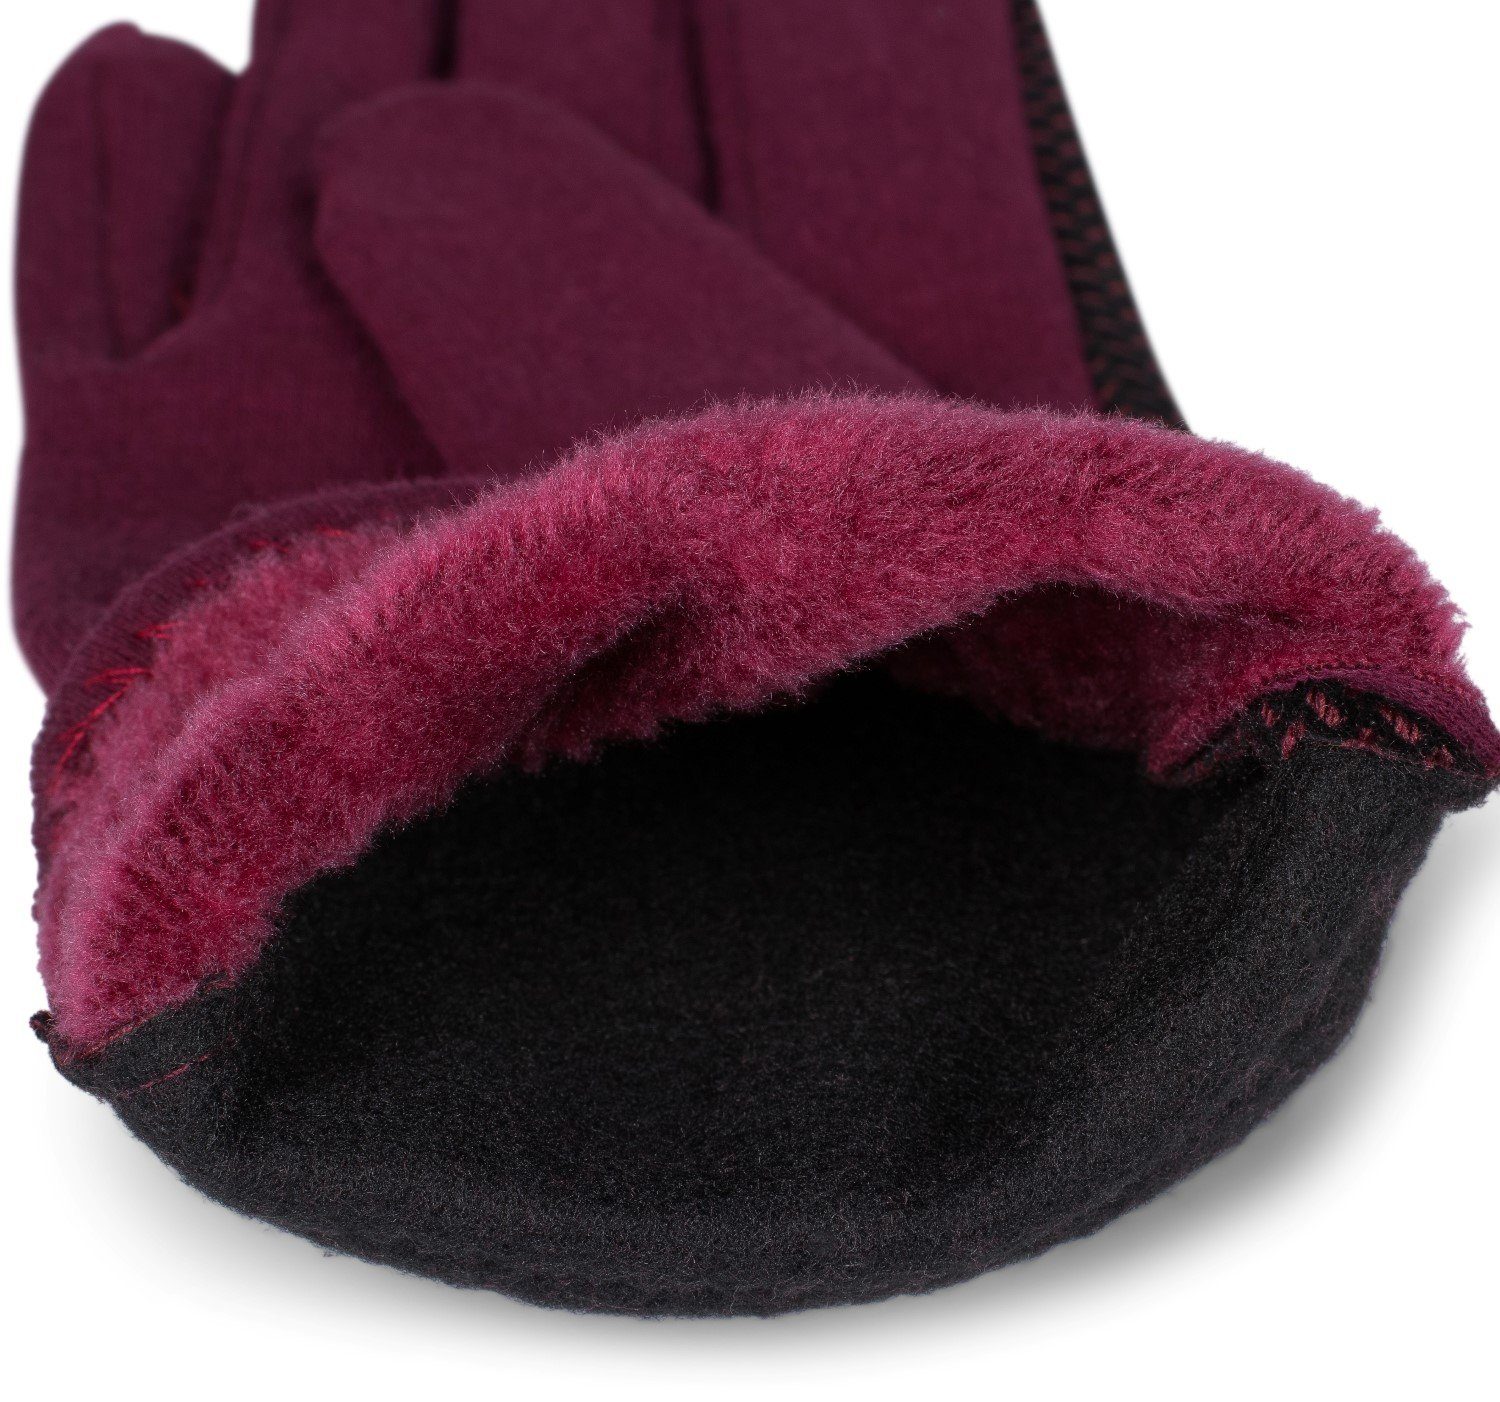 Baumwollhandschuhe Bordeaux-Rot weichem Muster Handschuhe Riffel mit styleBREAKER Touchscreen